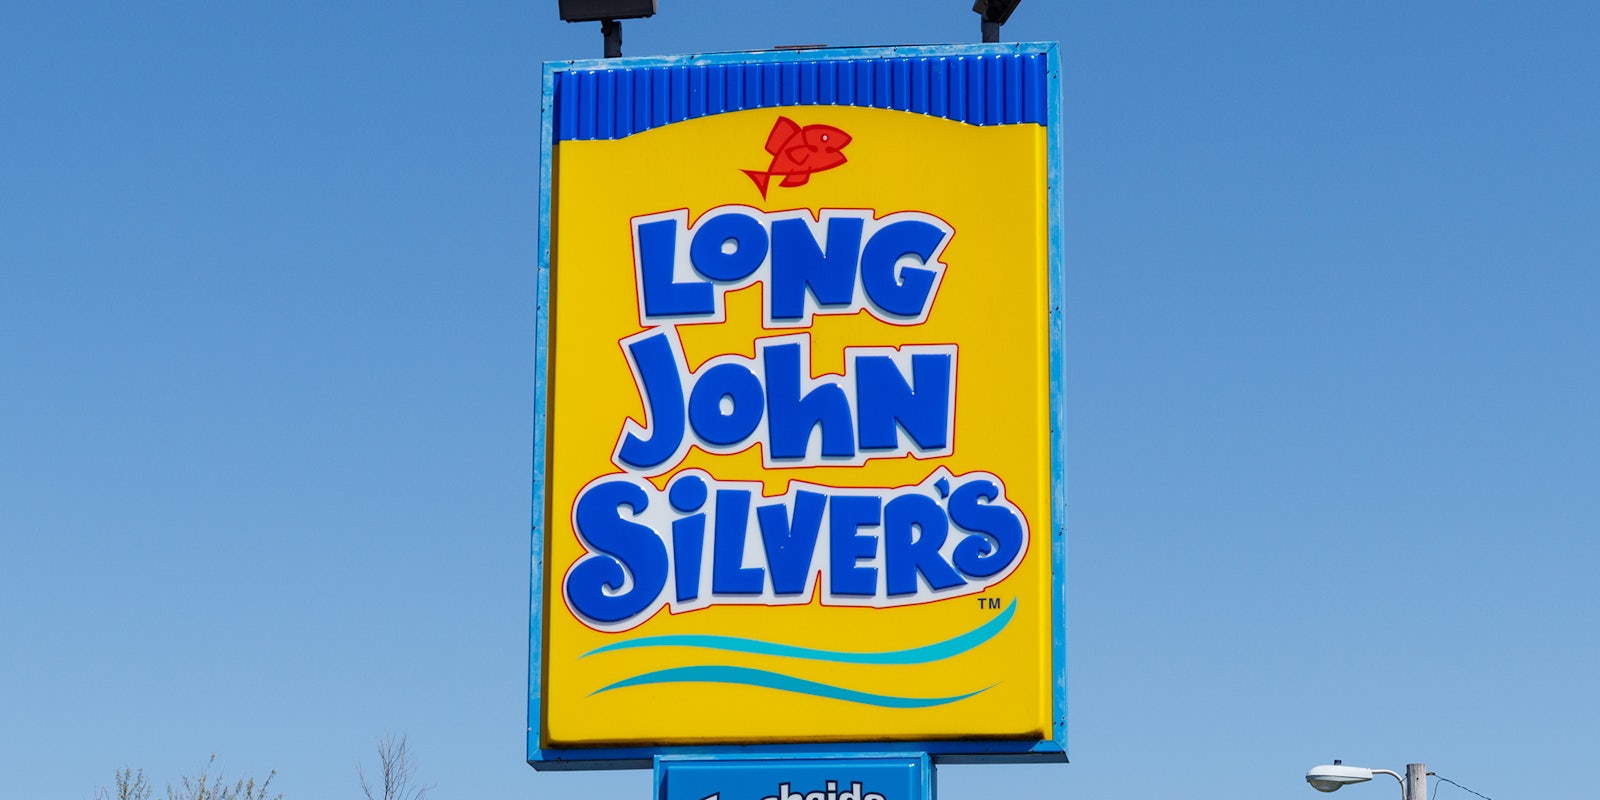 Long John Silver's fast food location